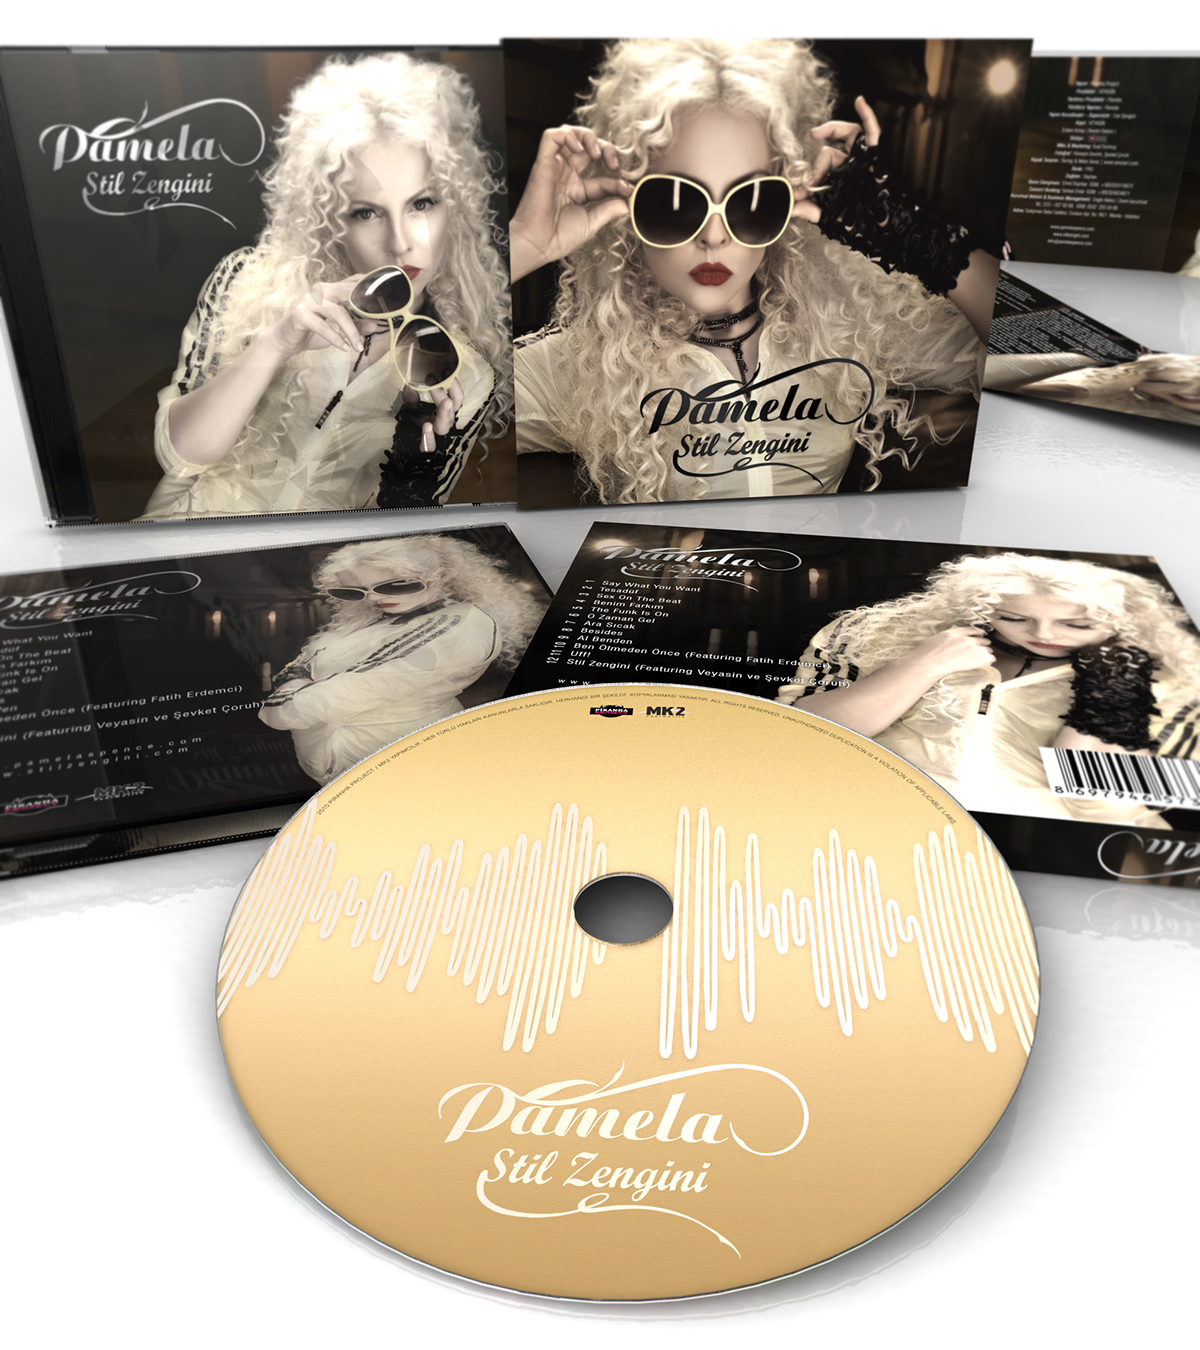 Pamela Spence  stil zengini  album cover cd Singer pop corporate  identity visual design sertaç serez sertacserez graphic grafik